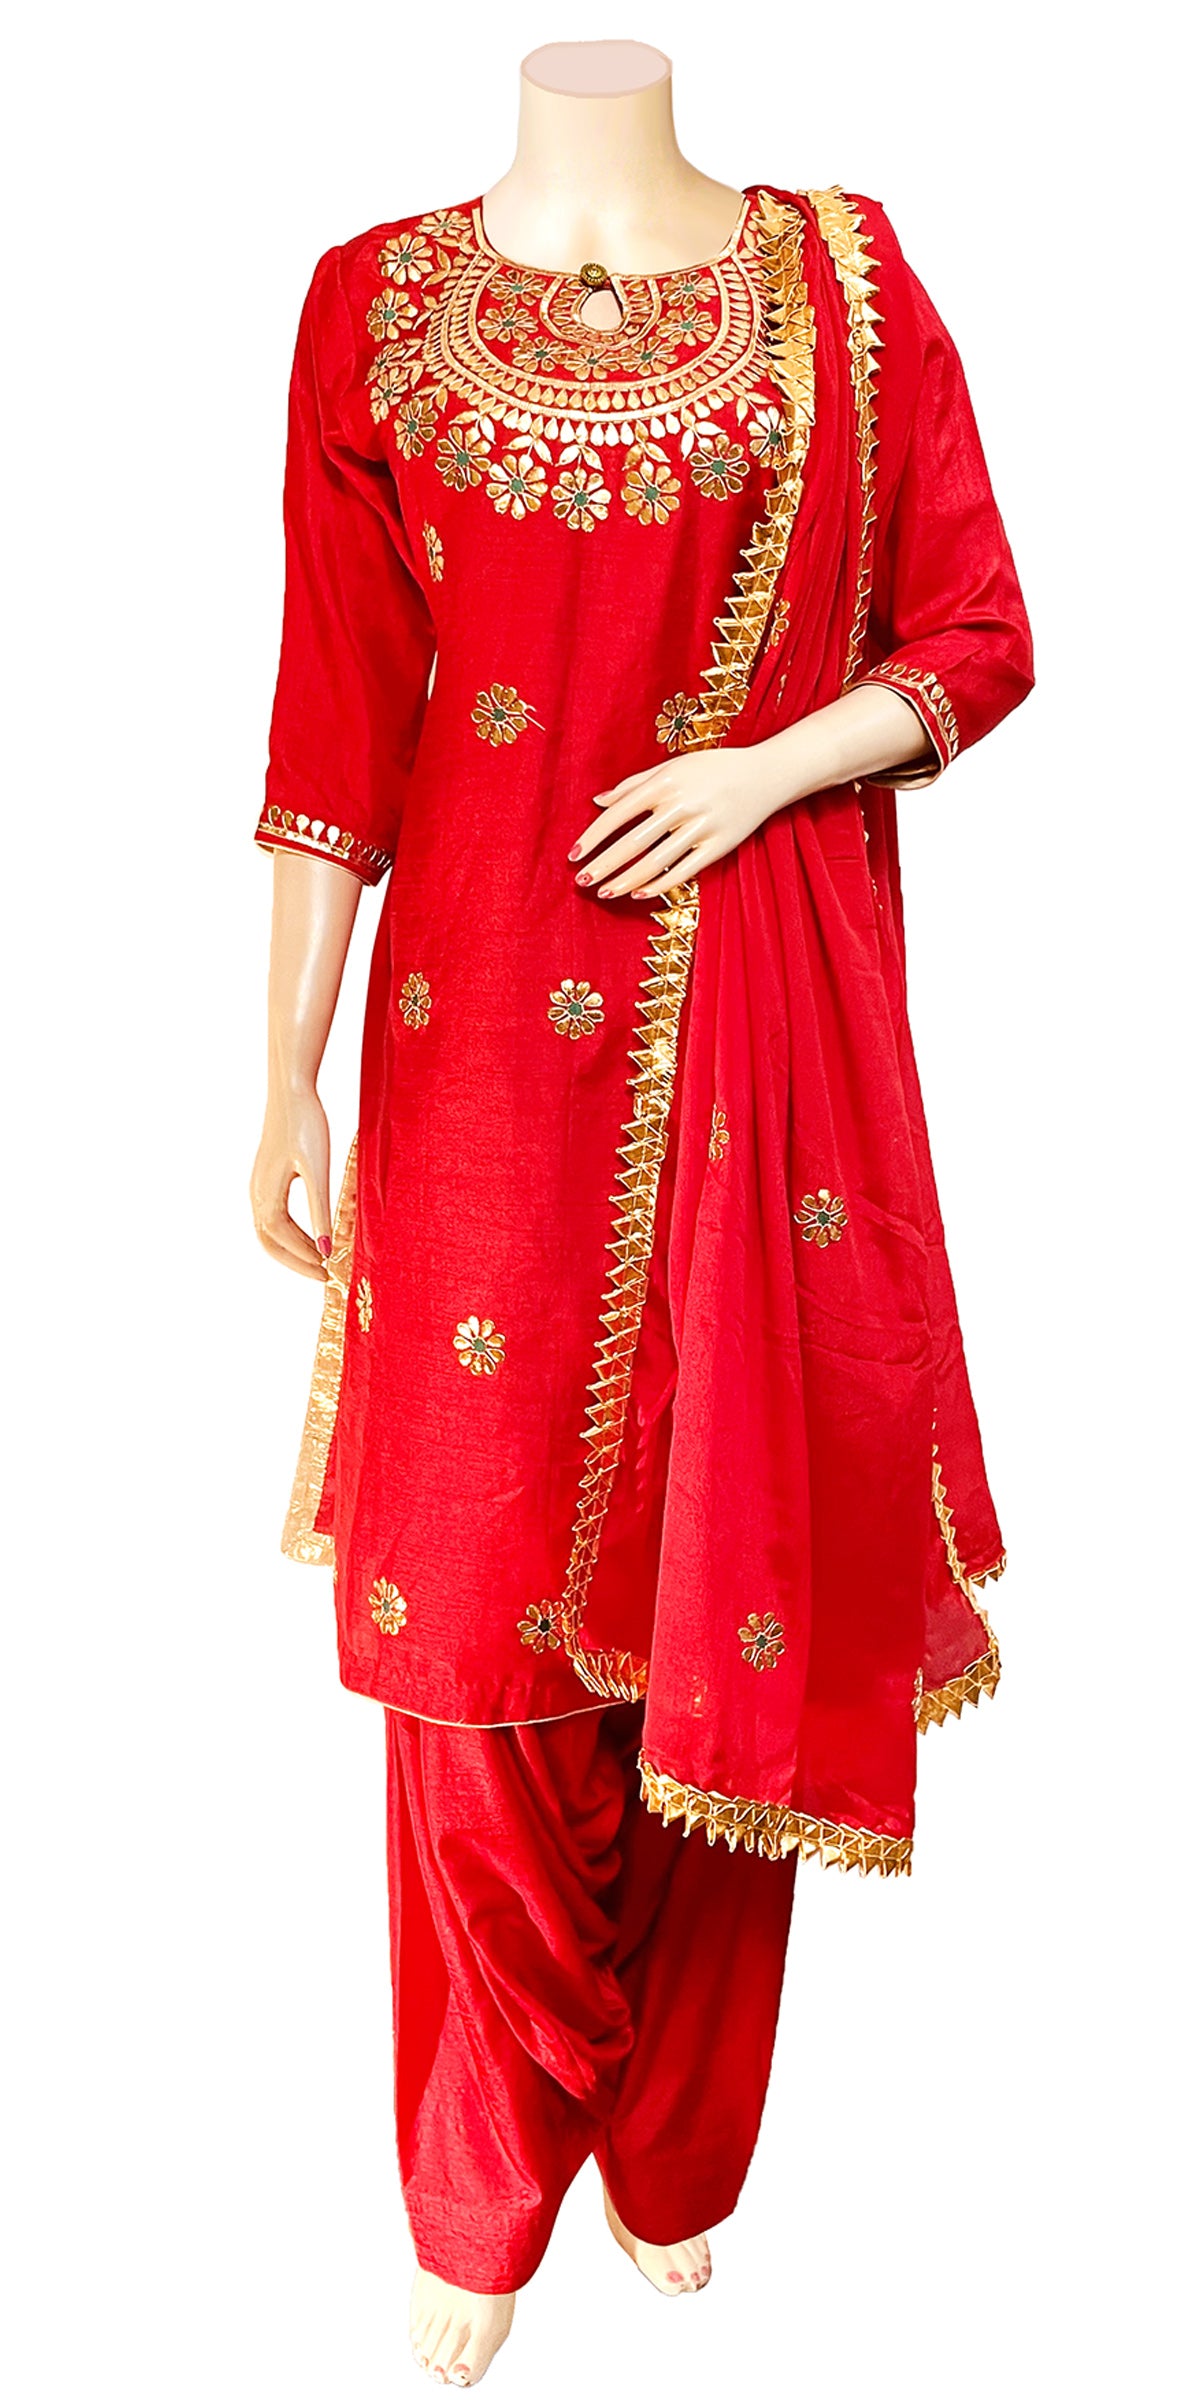 Red Salwar Suit, Golden Red Full Patiala salwar Kameez, Gota Patti Hand embroidery, Silk Salwar Kameez, Embroidered Salwar kameez, punjabi salwar suit, Indian Salwar suit for wedding, Partywear salwar suit, Bride to be Indian Dress